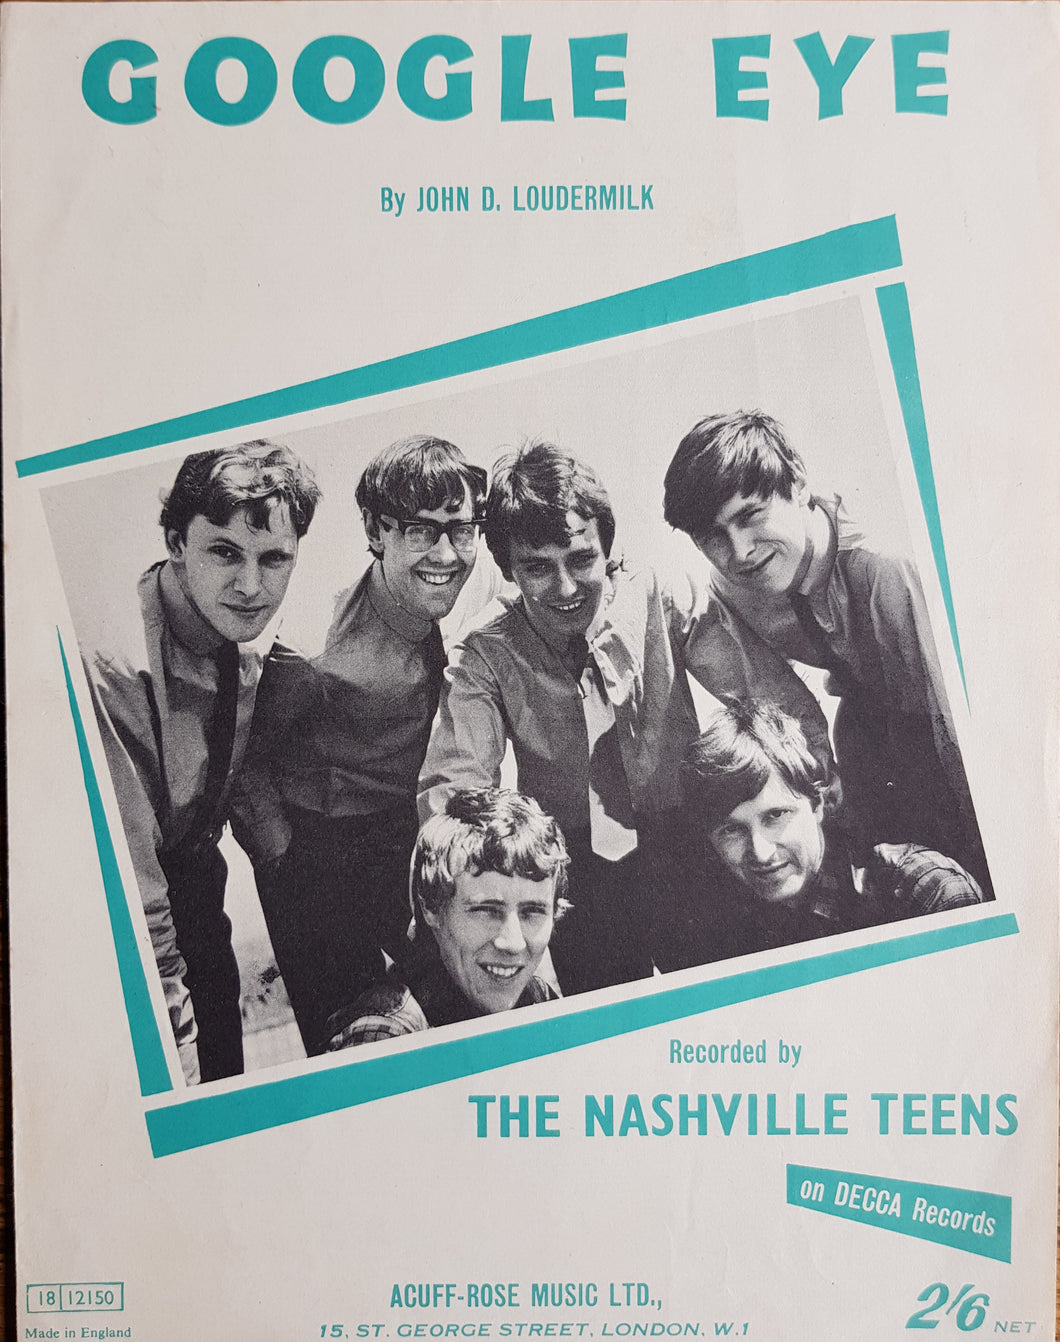 Nashville Teens - Google Eye